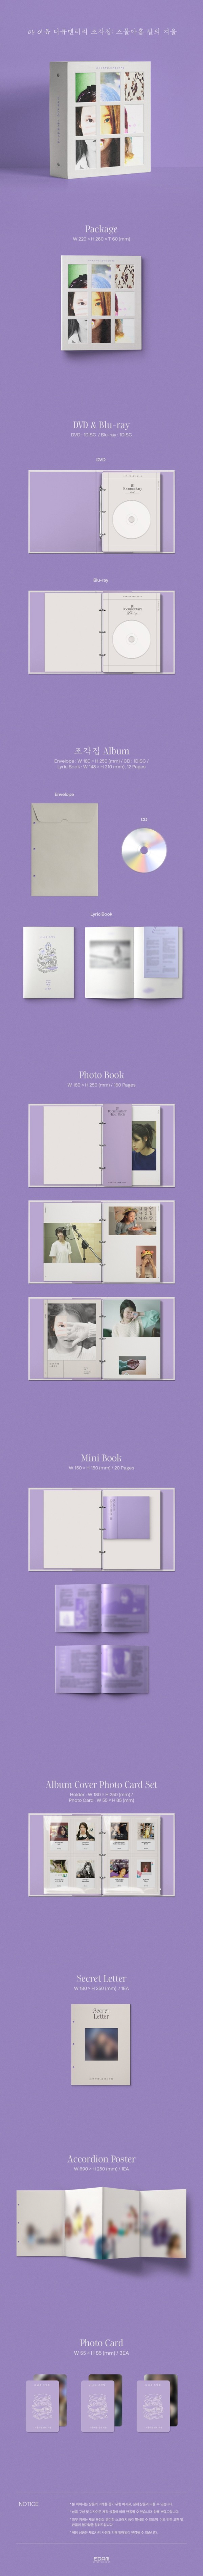 IU｜ドキュメンタリー『彫刻屋 : 29歳の冬』DVD + Blu-ray + CD<限定盤>